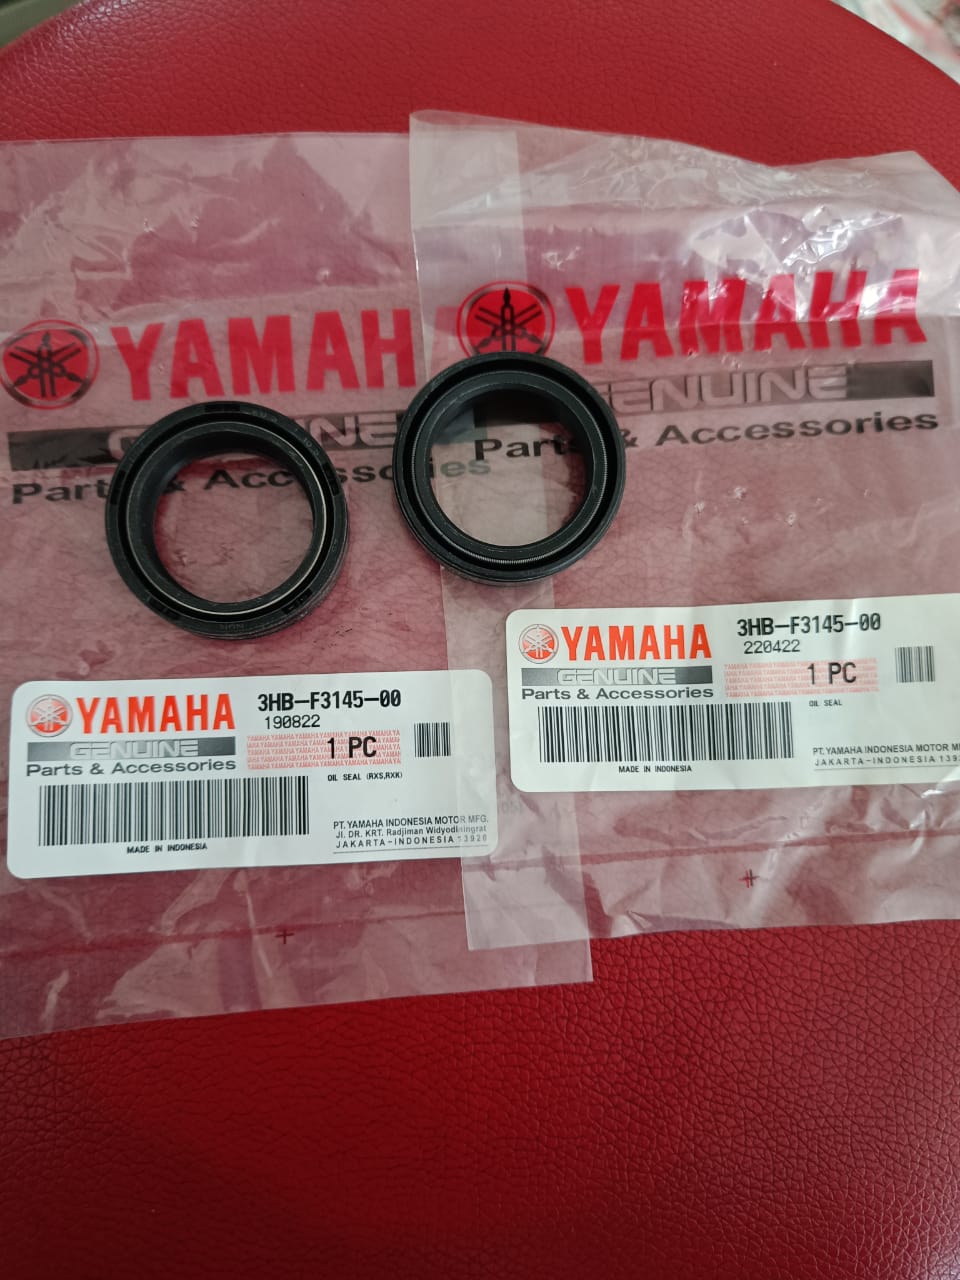 Seal Shock Depan Nmax - All New Nmax Original Yamaha Genuine Parts